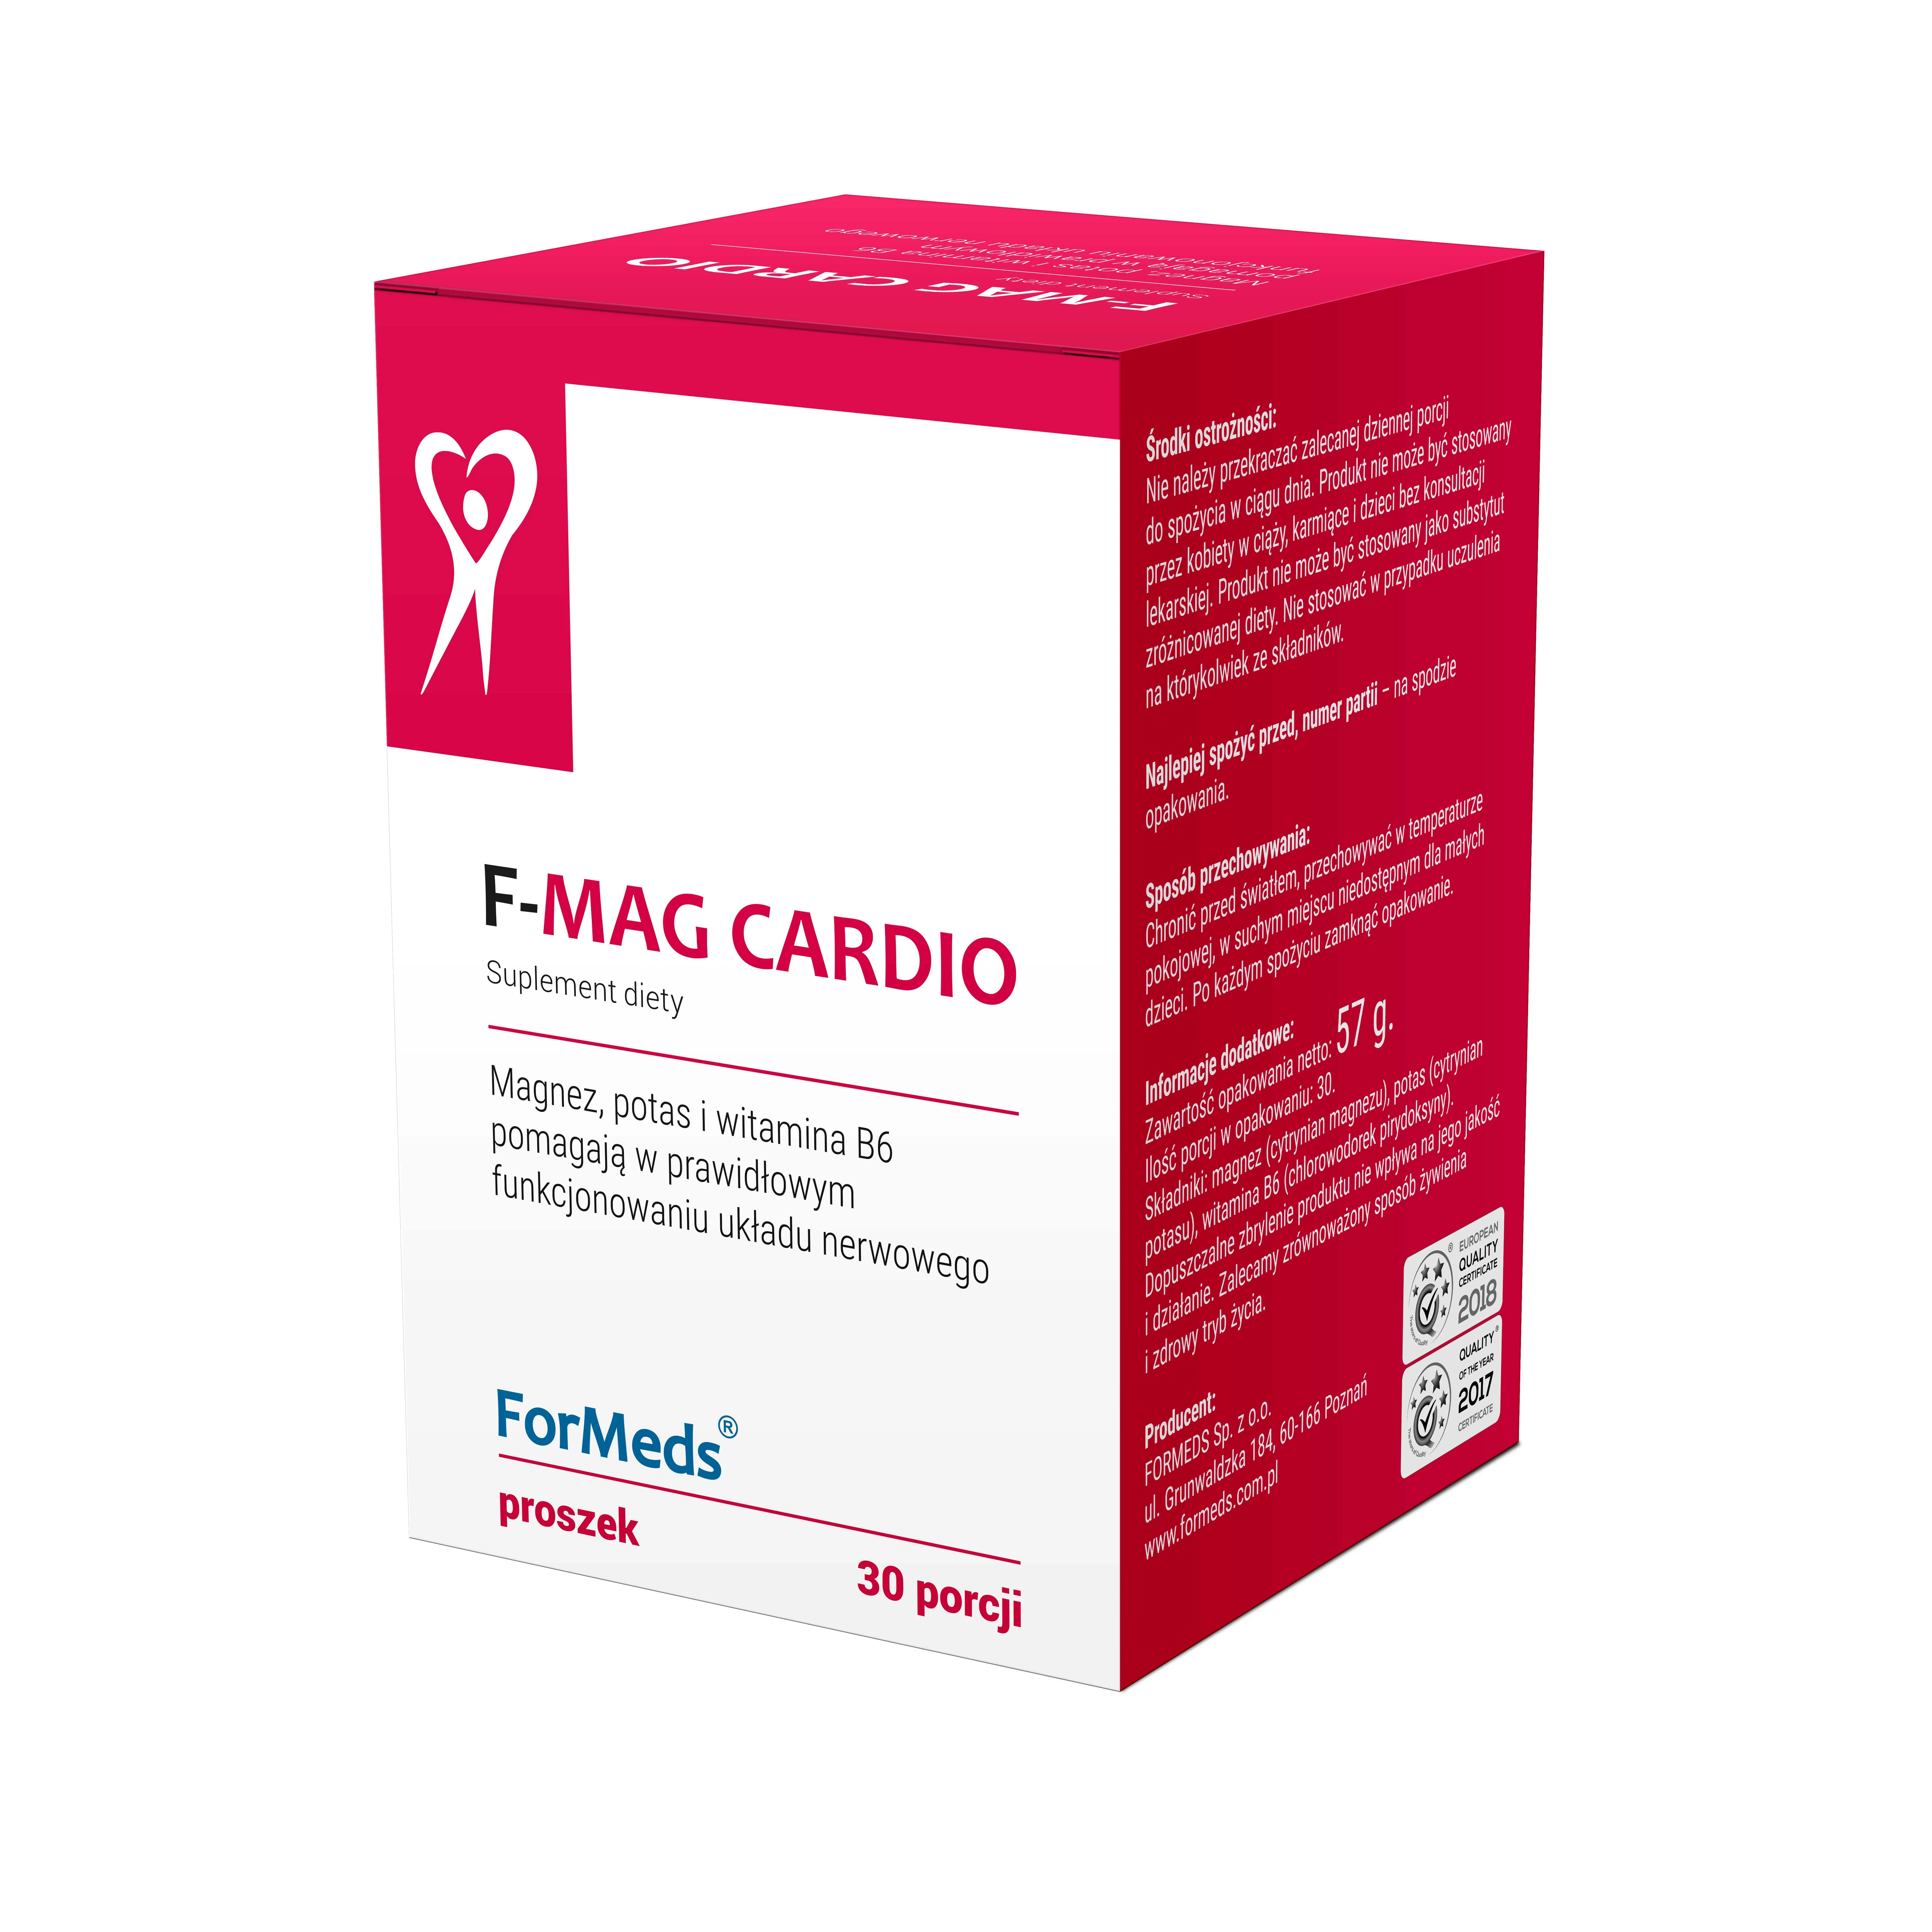 ForMeds F-Mag Cardio, suplement diety, proszek, 30 porcji